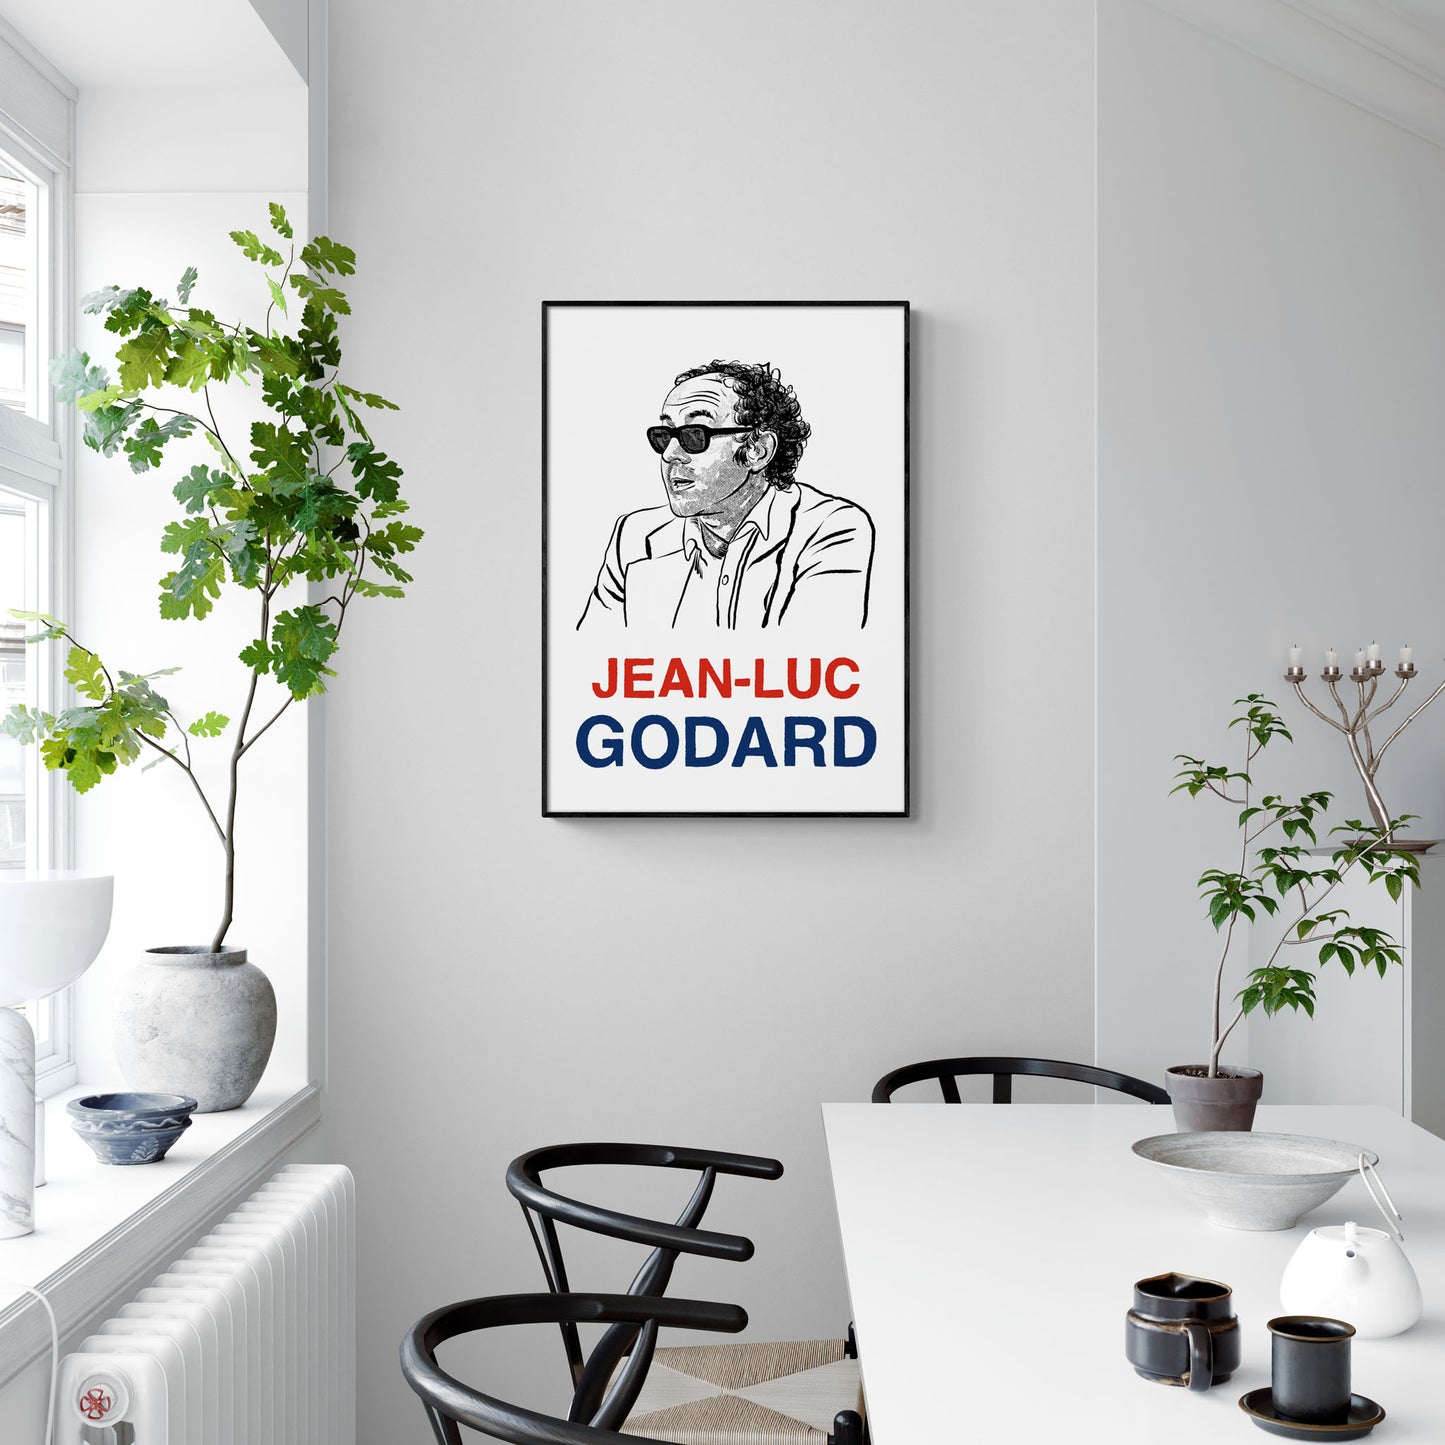 Jean-Luc Godard Portrait Poster Print